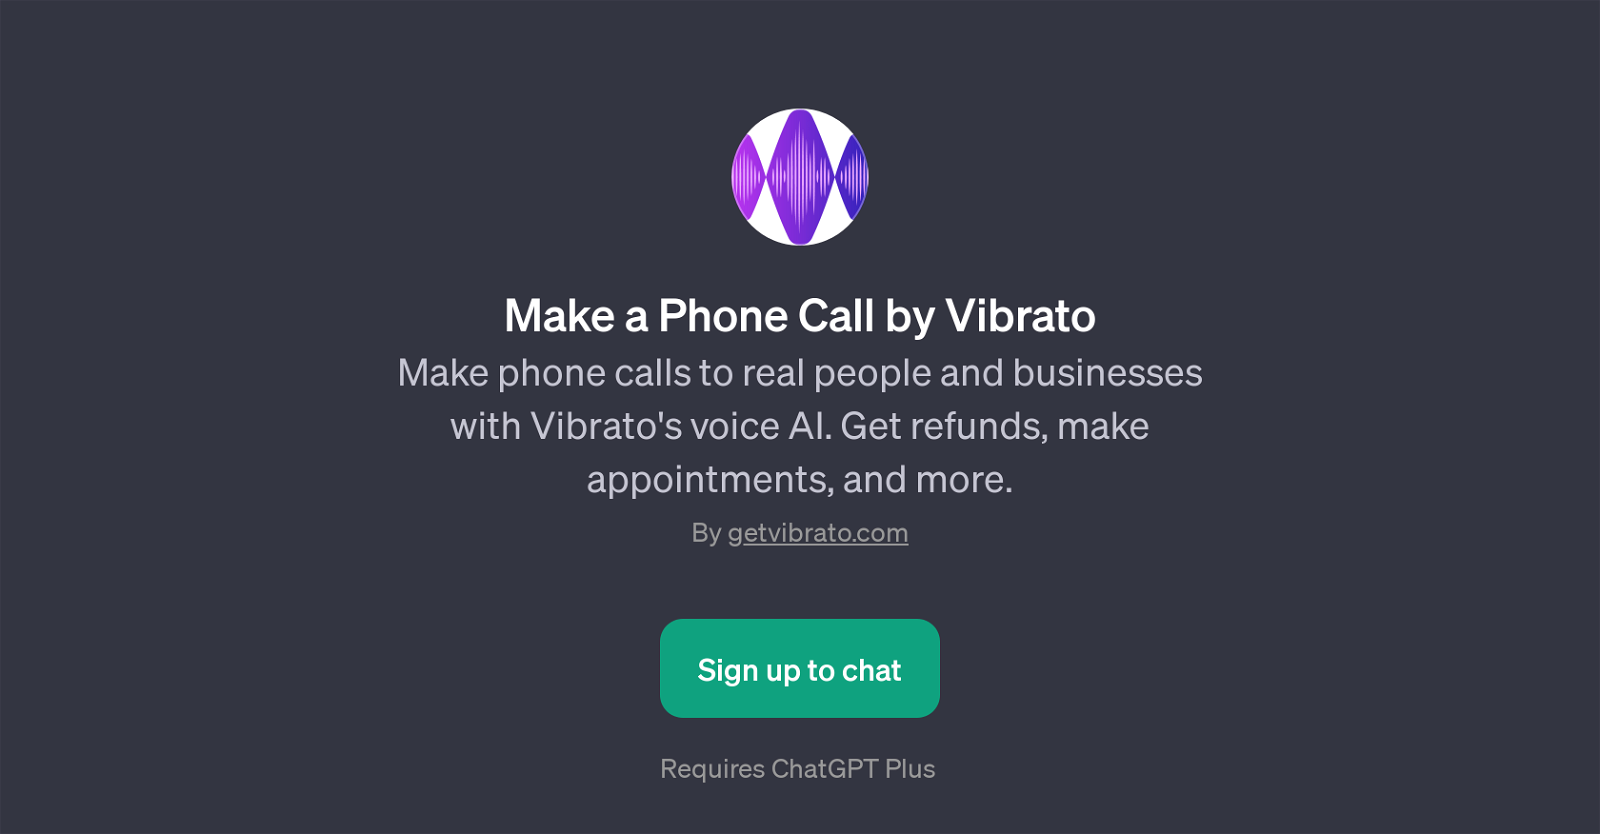 Make a Phone Call by Vibrato website